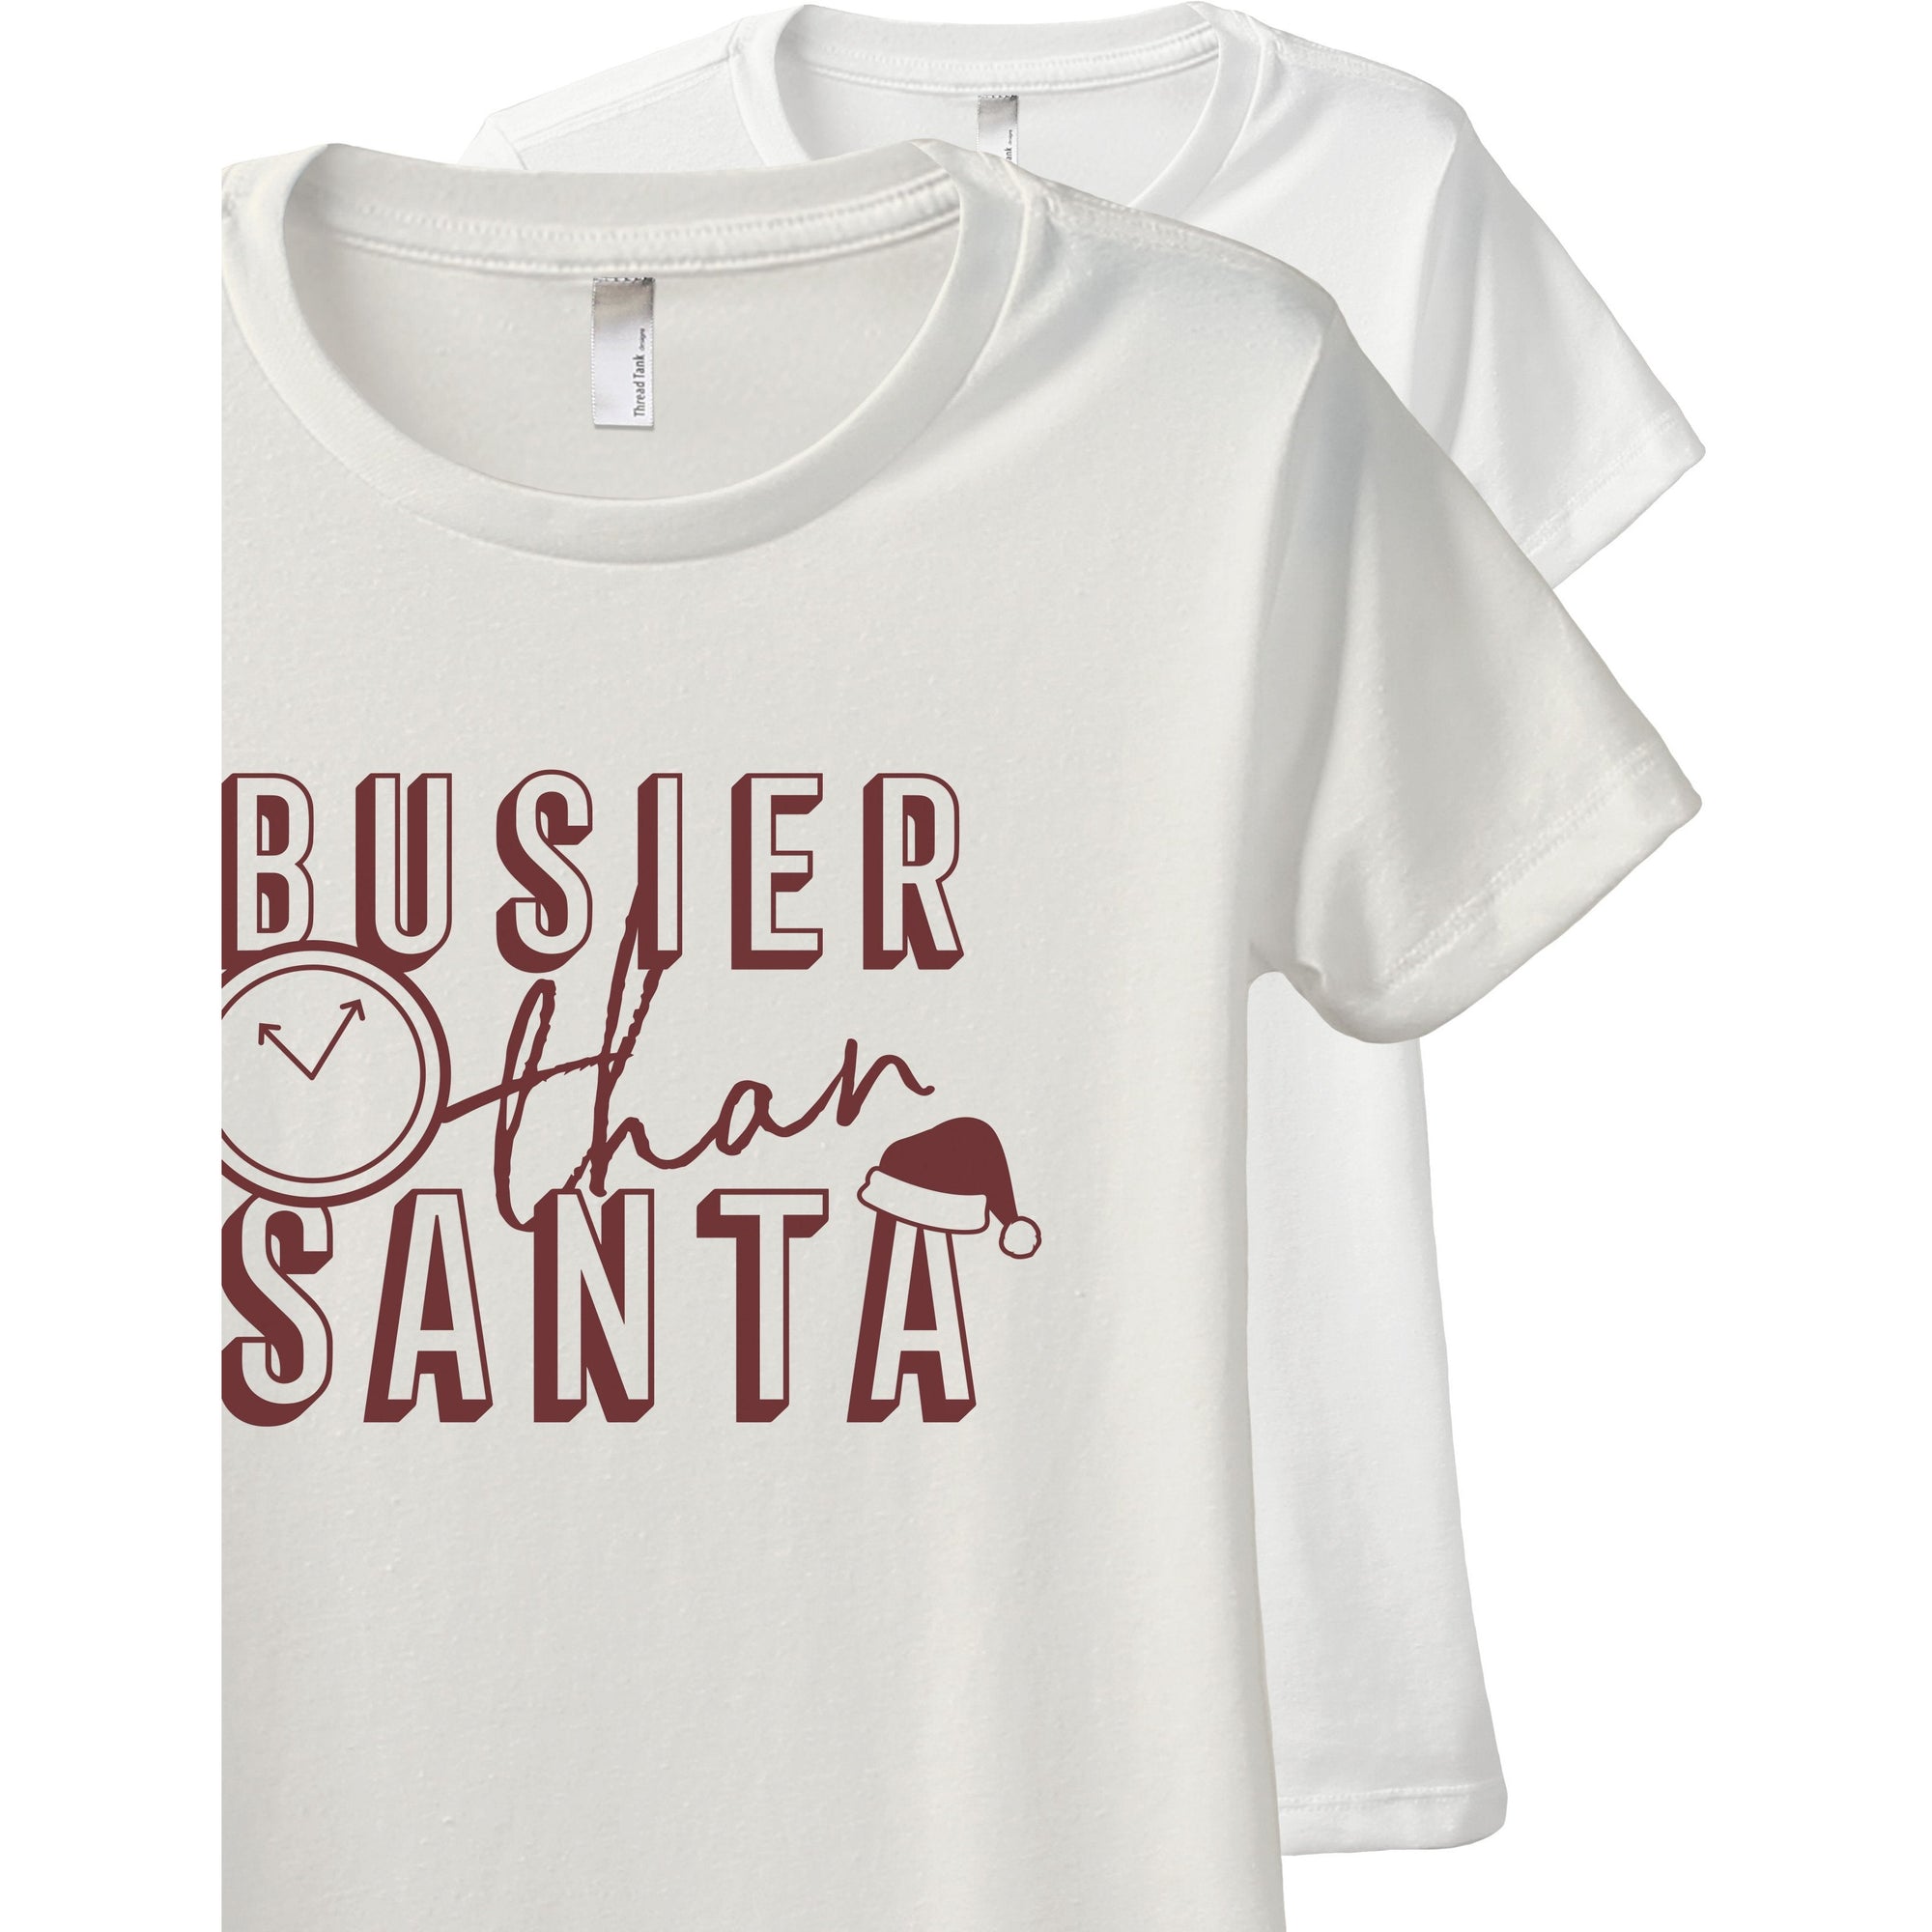 Busier Than Santa Women's Relaxed Crewneck T-Shirt Top Tee Vintage White Scarlet Scarlet Print Zoom Details